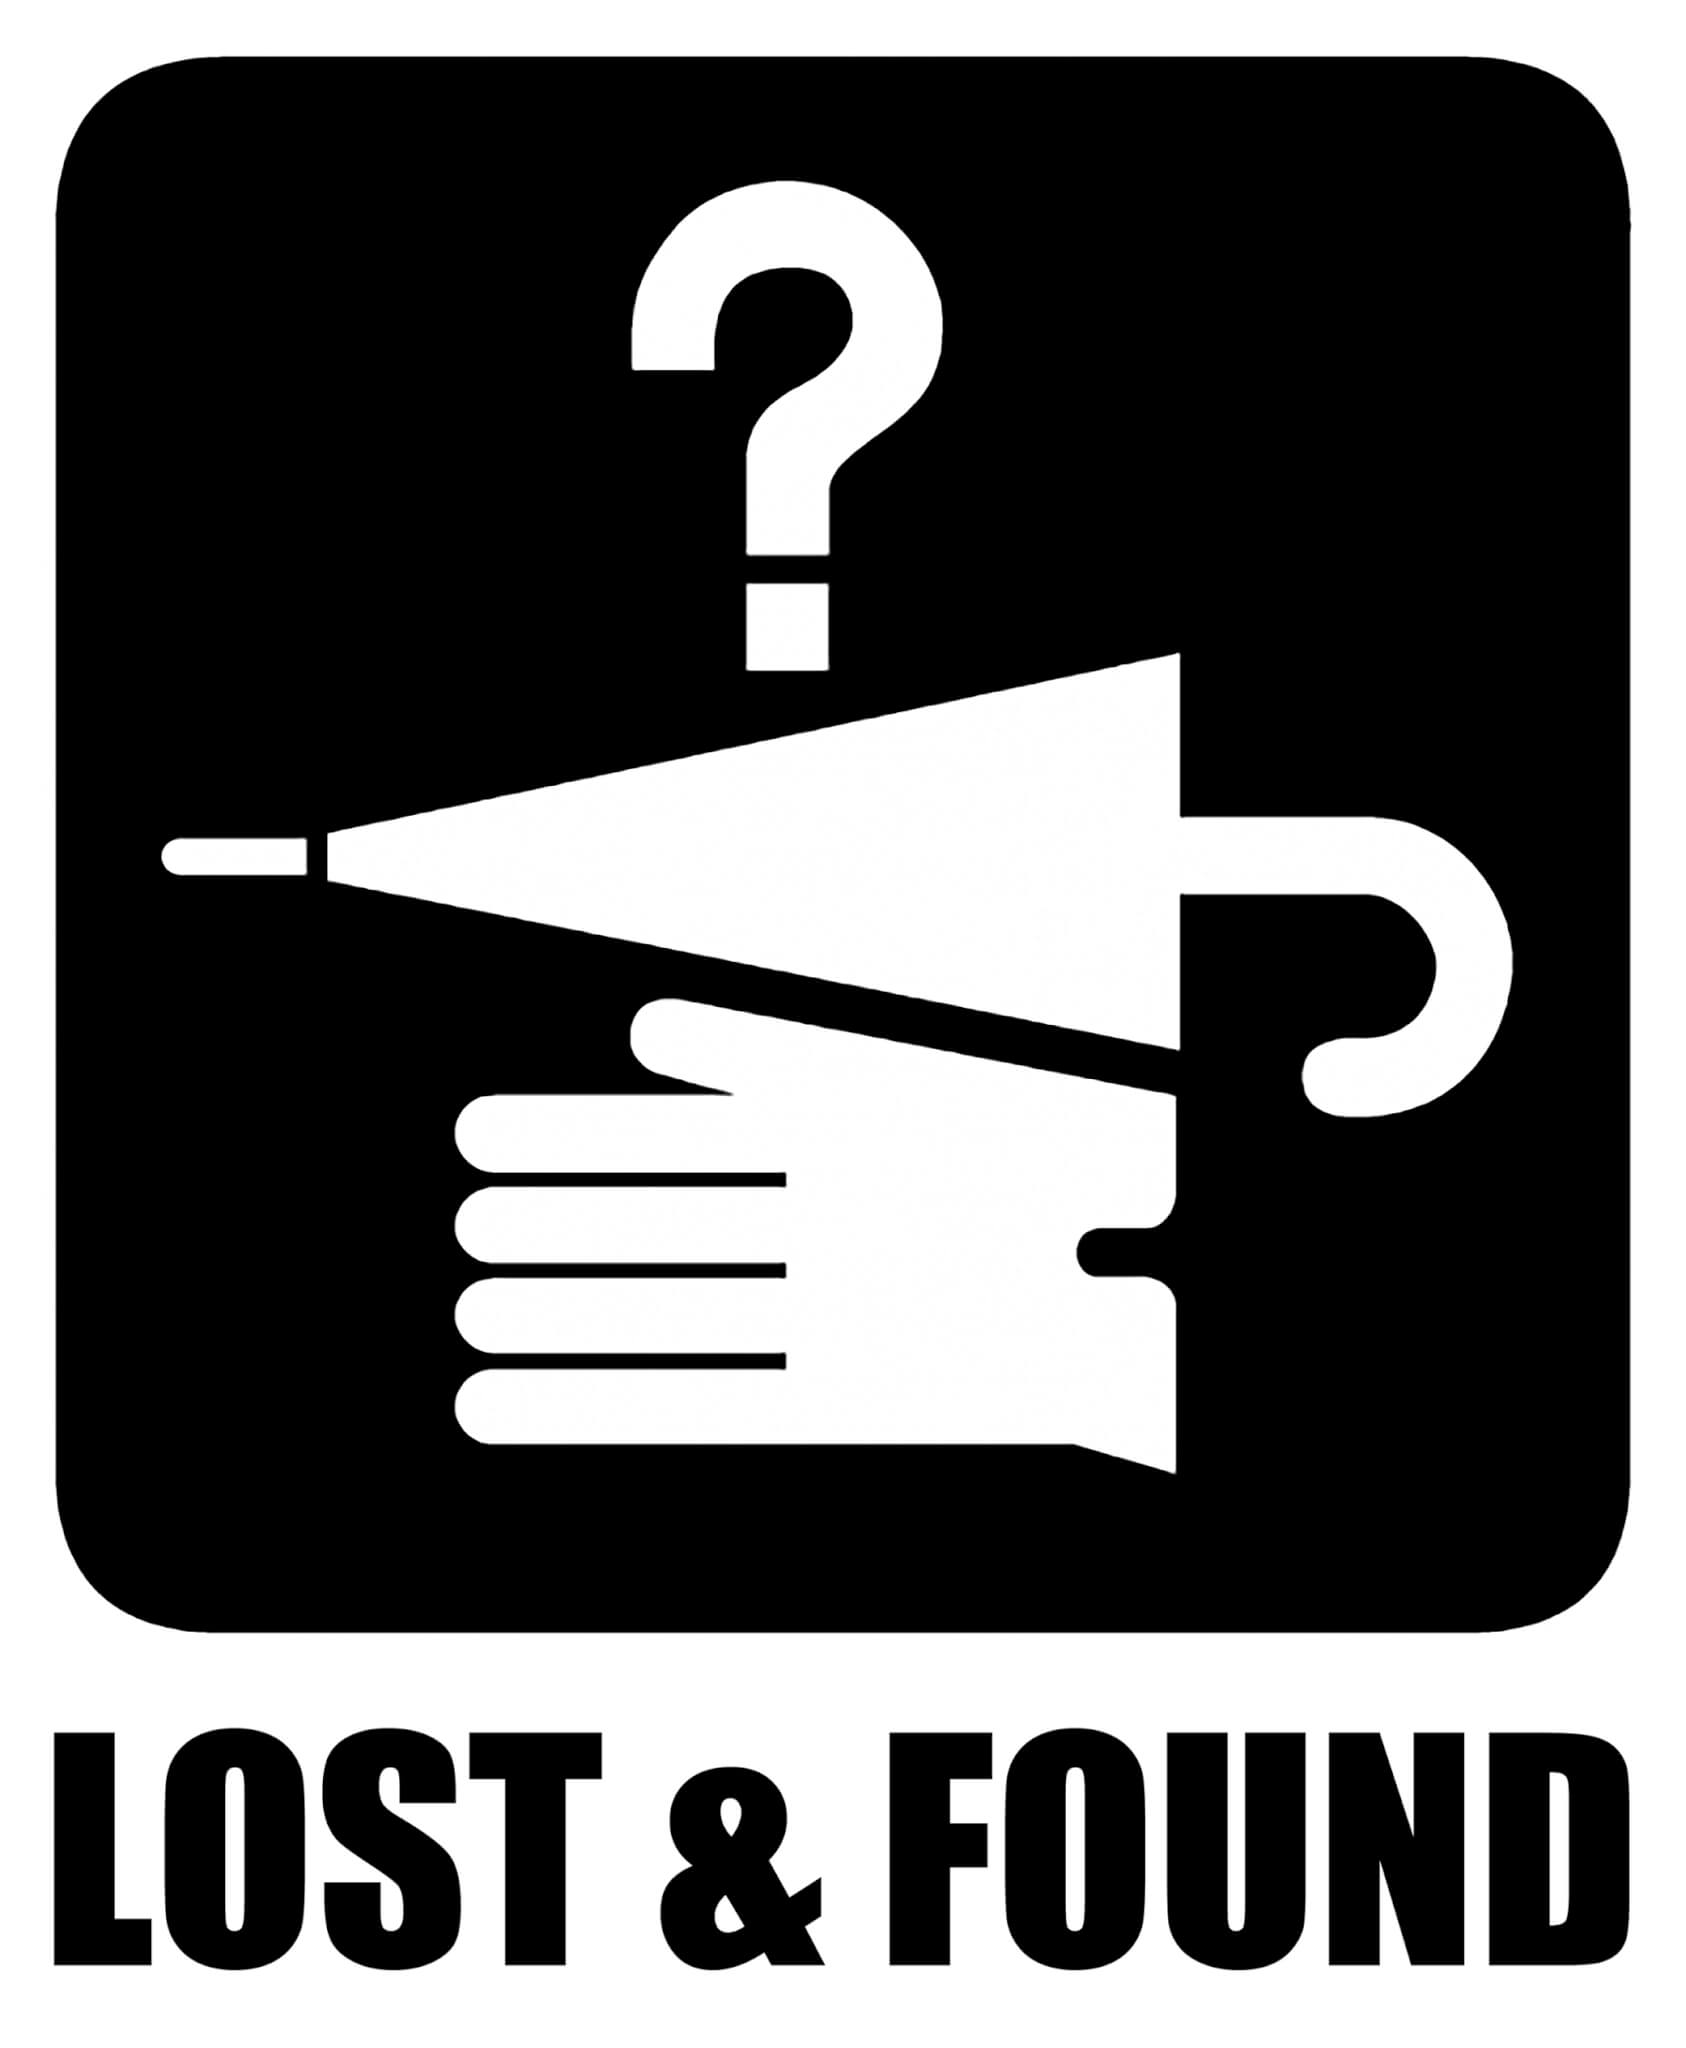 Lost & found graphic